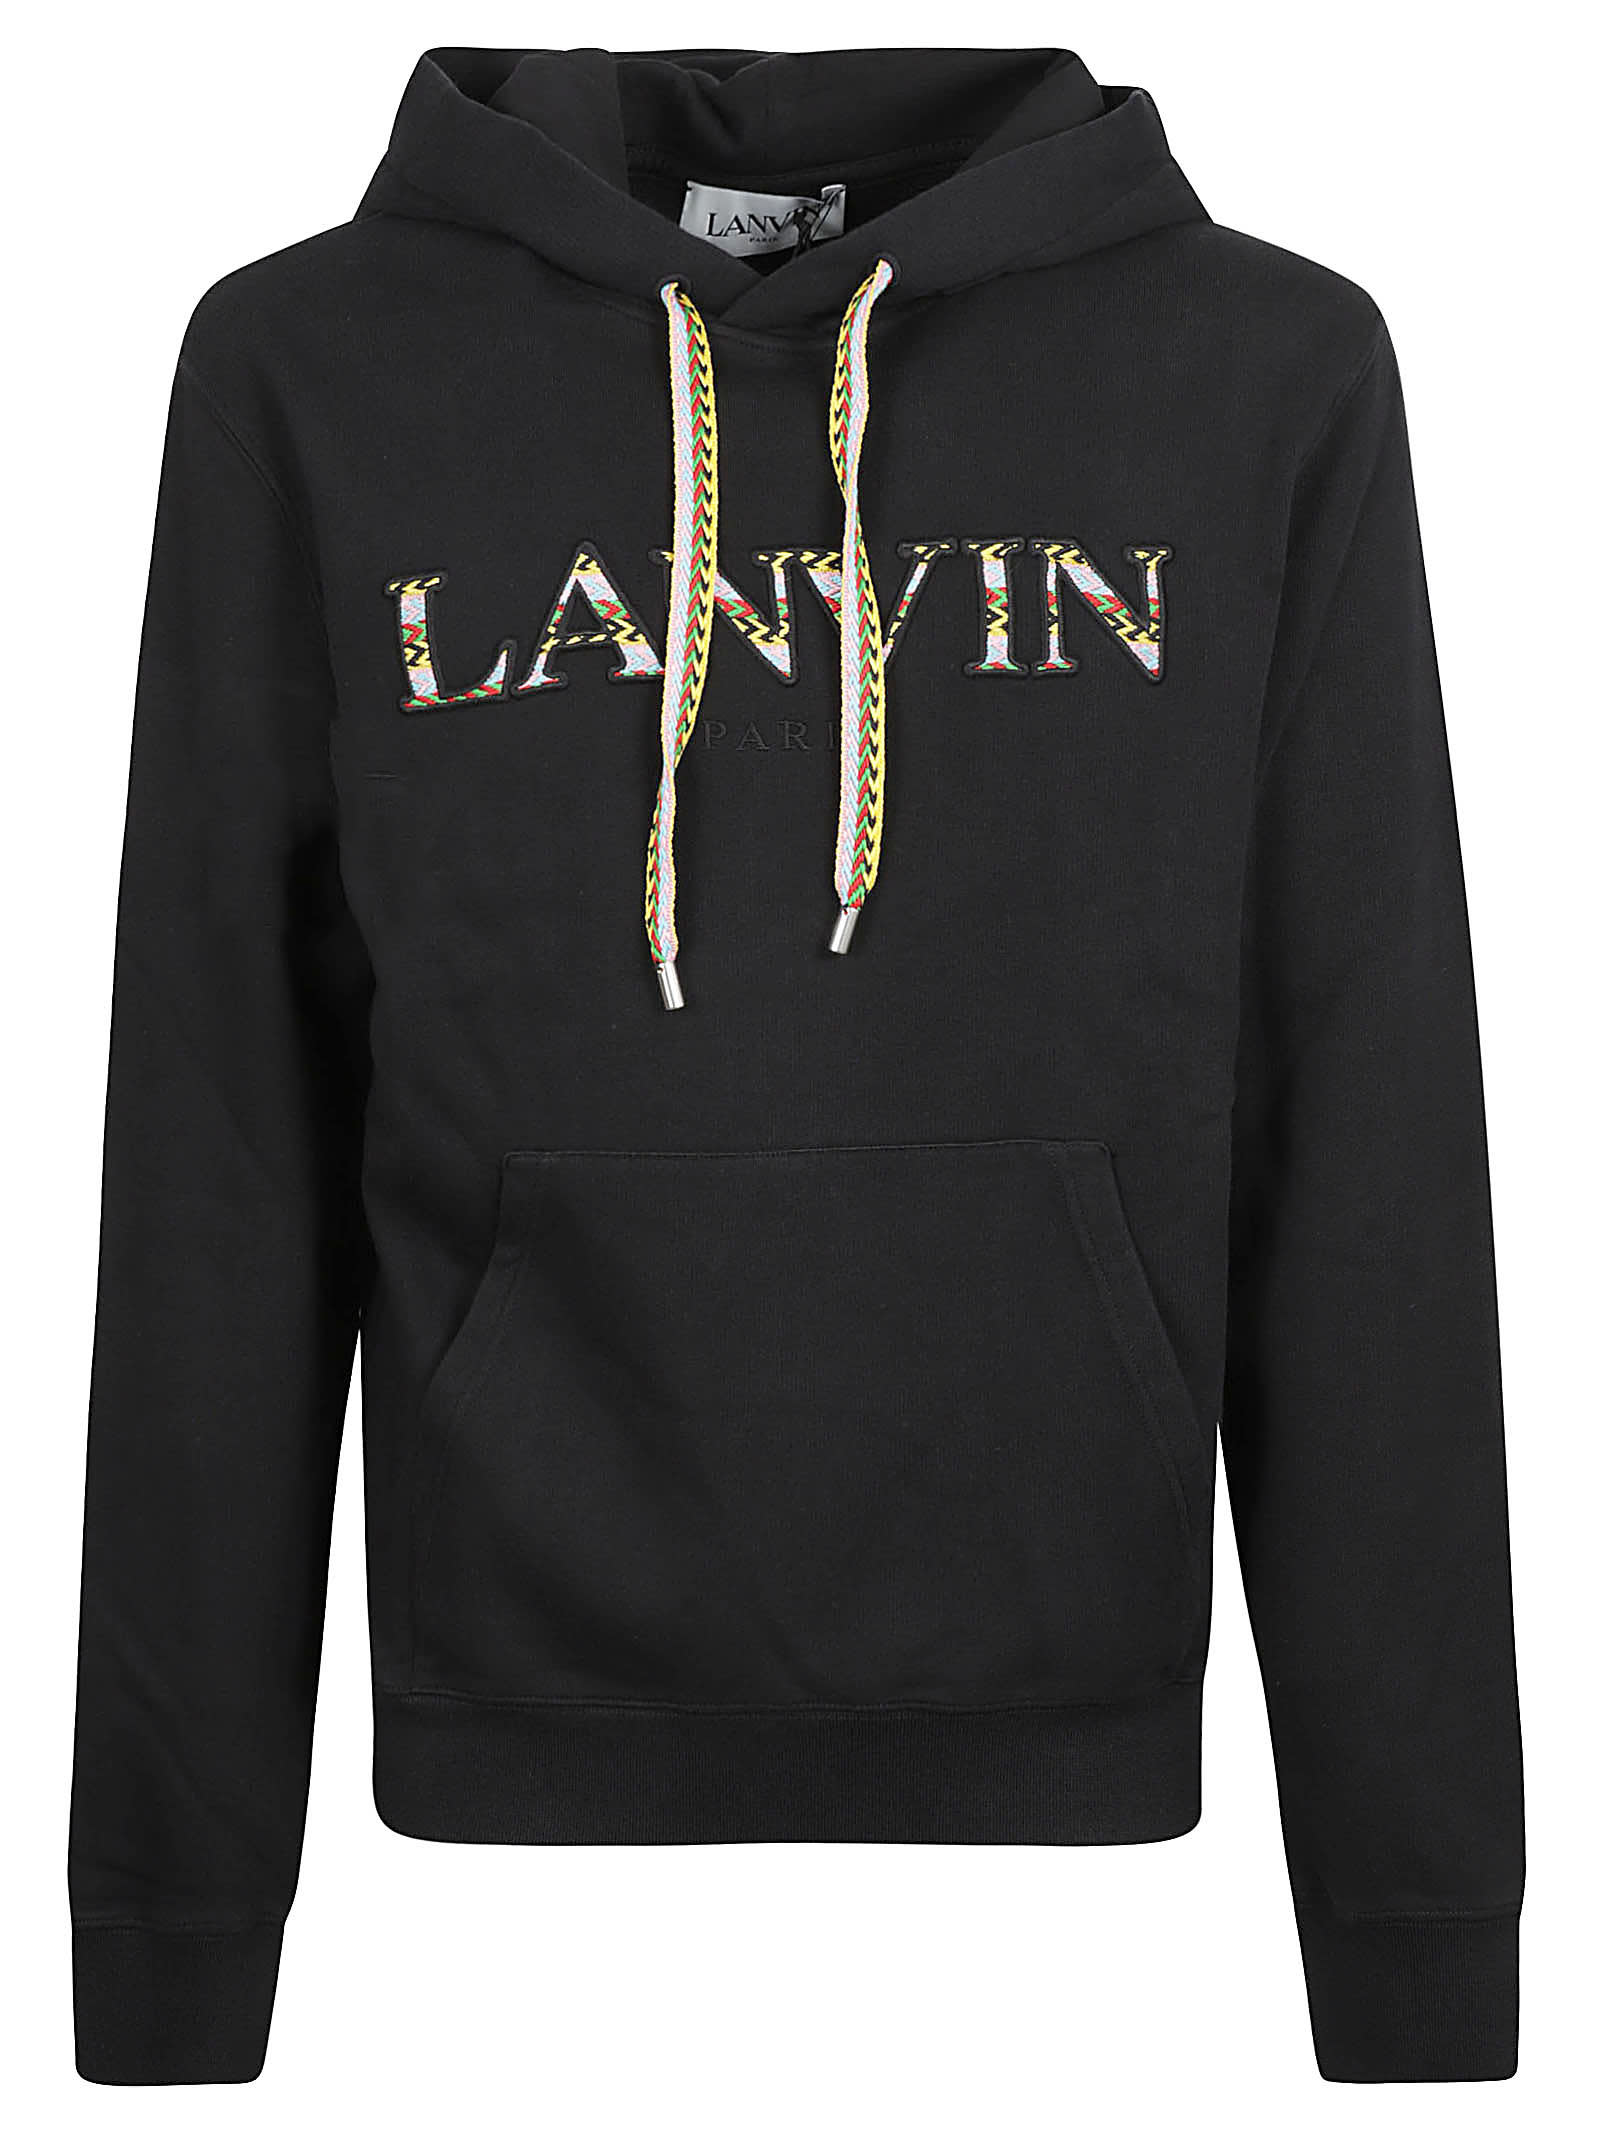 Lanvin Logo Hoodie